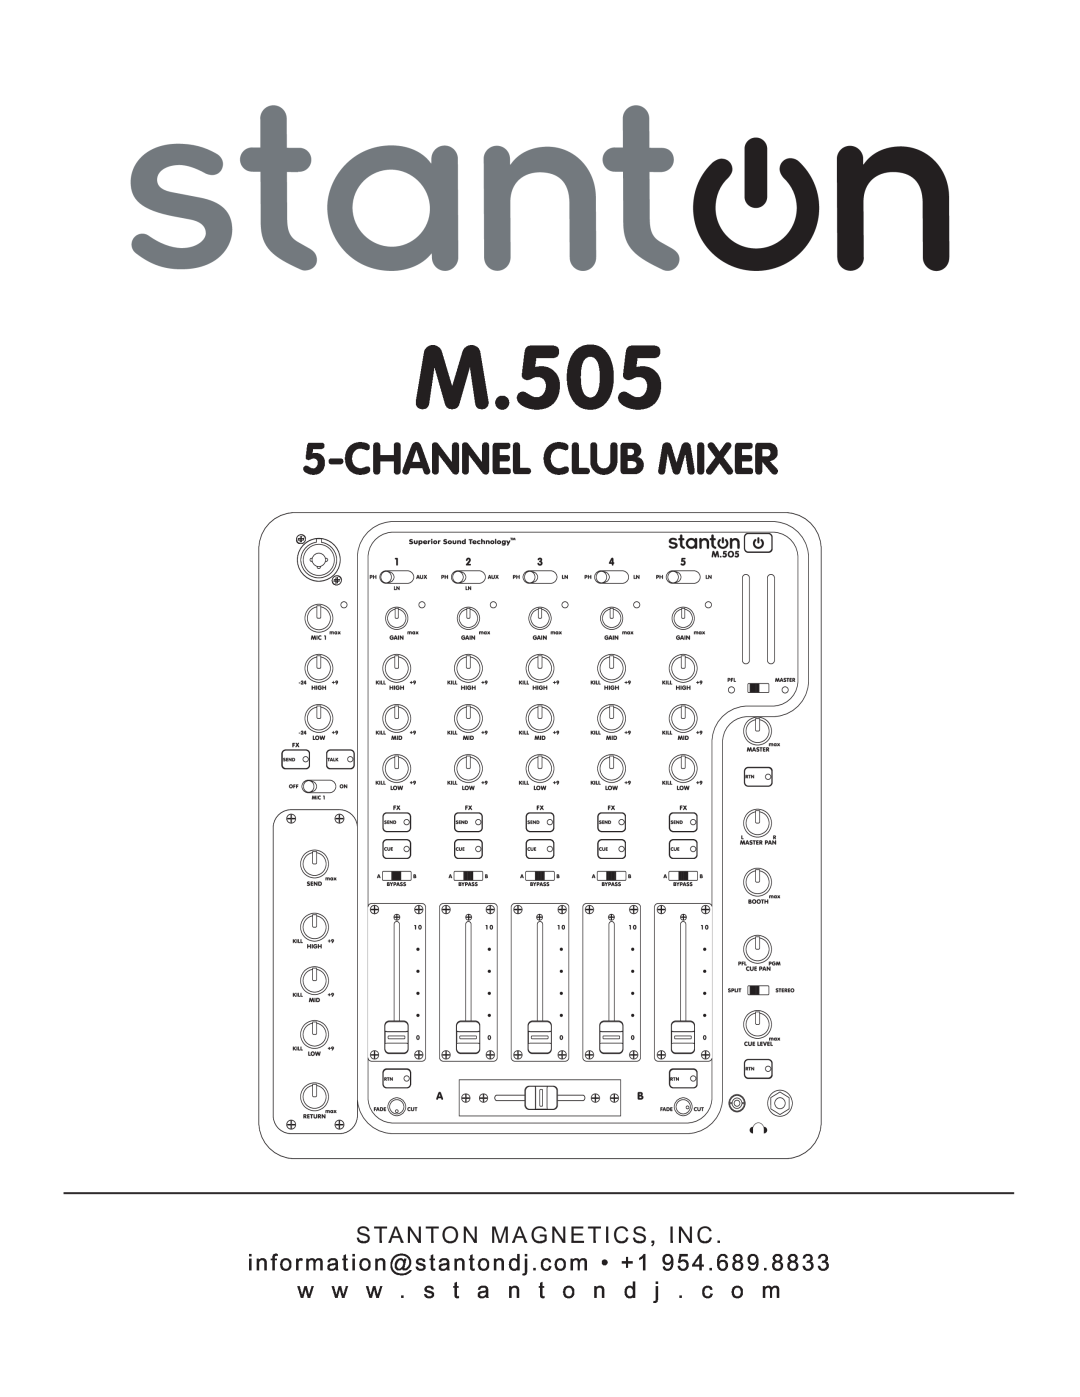 Stanton M.505 manual Channel Club Mixer, S TANTON MAGNETICS, INC information@stantondj . com +1 954 . 689 